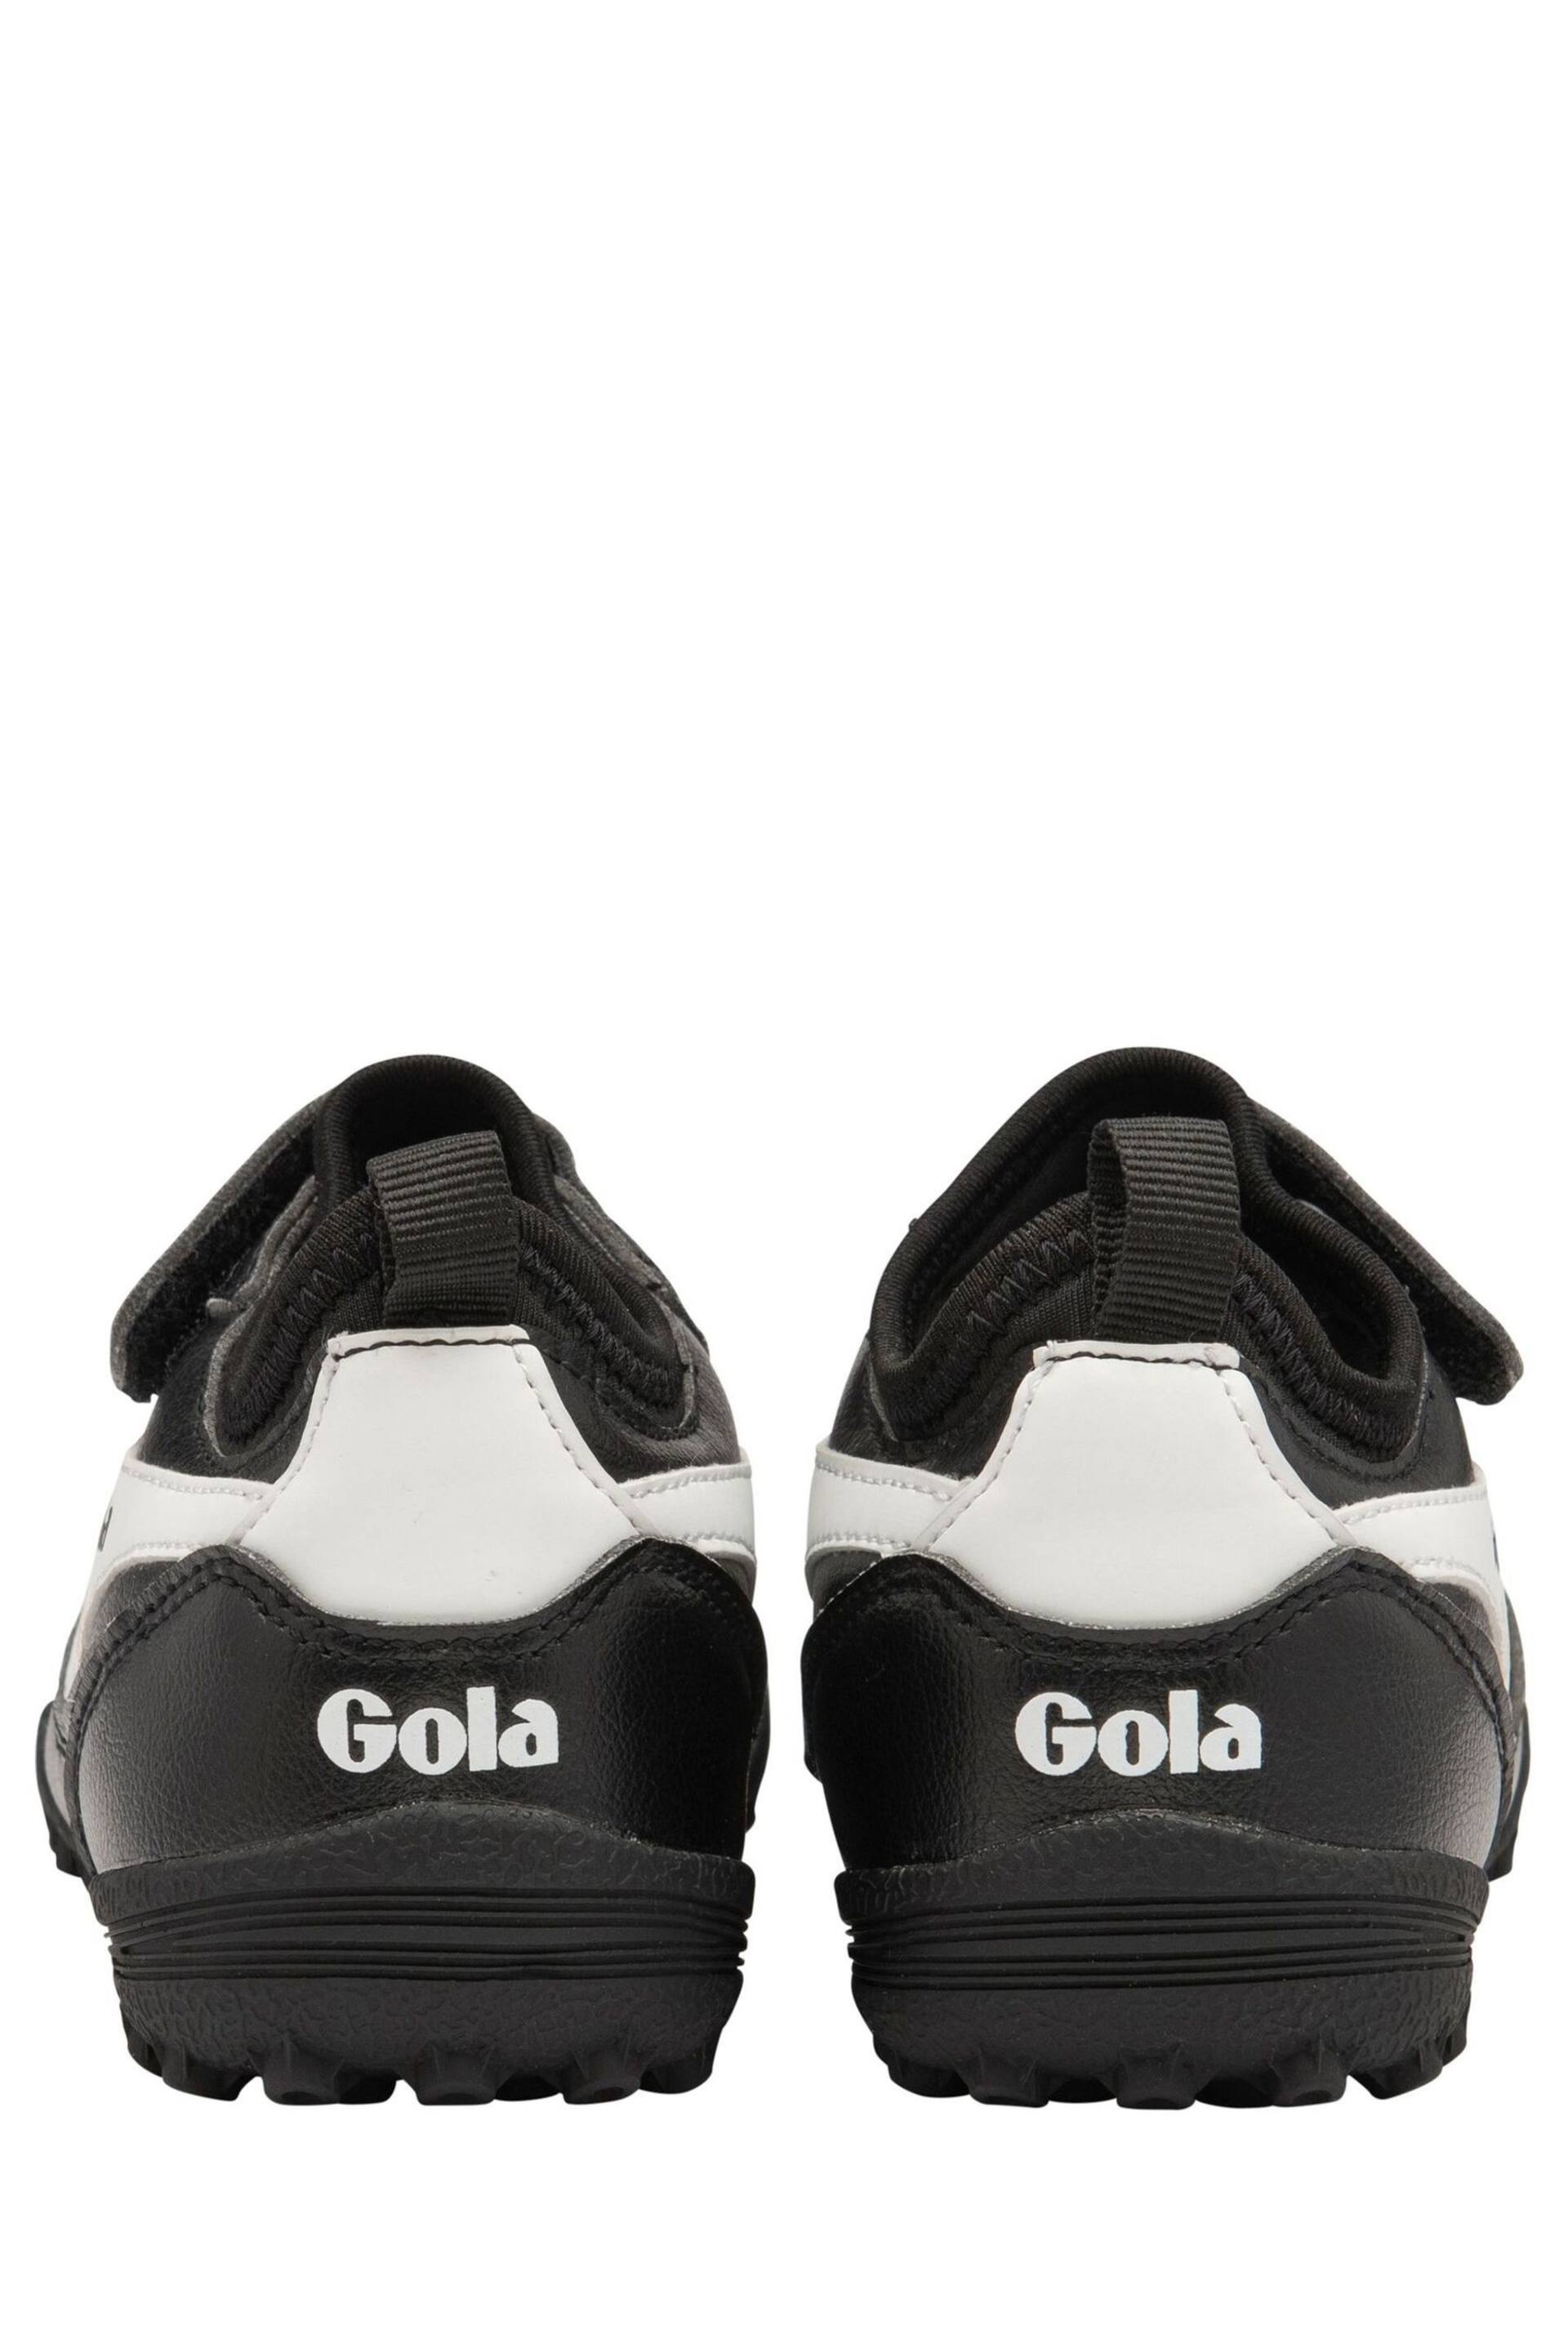 Gola Black/White Kids Ceptor Turf Microfibre Quick Fasten Football Boots - Image 3 of 5